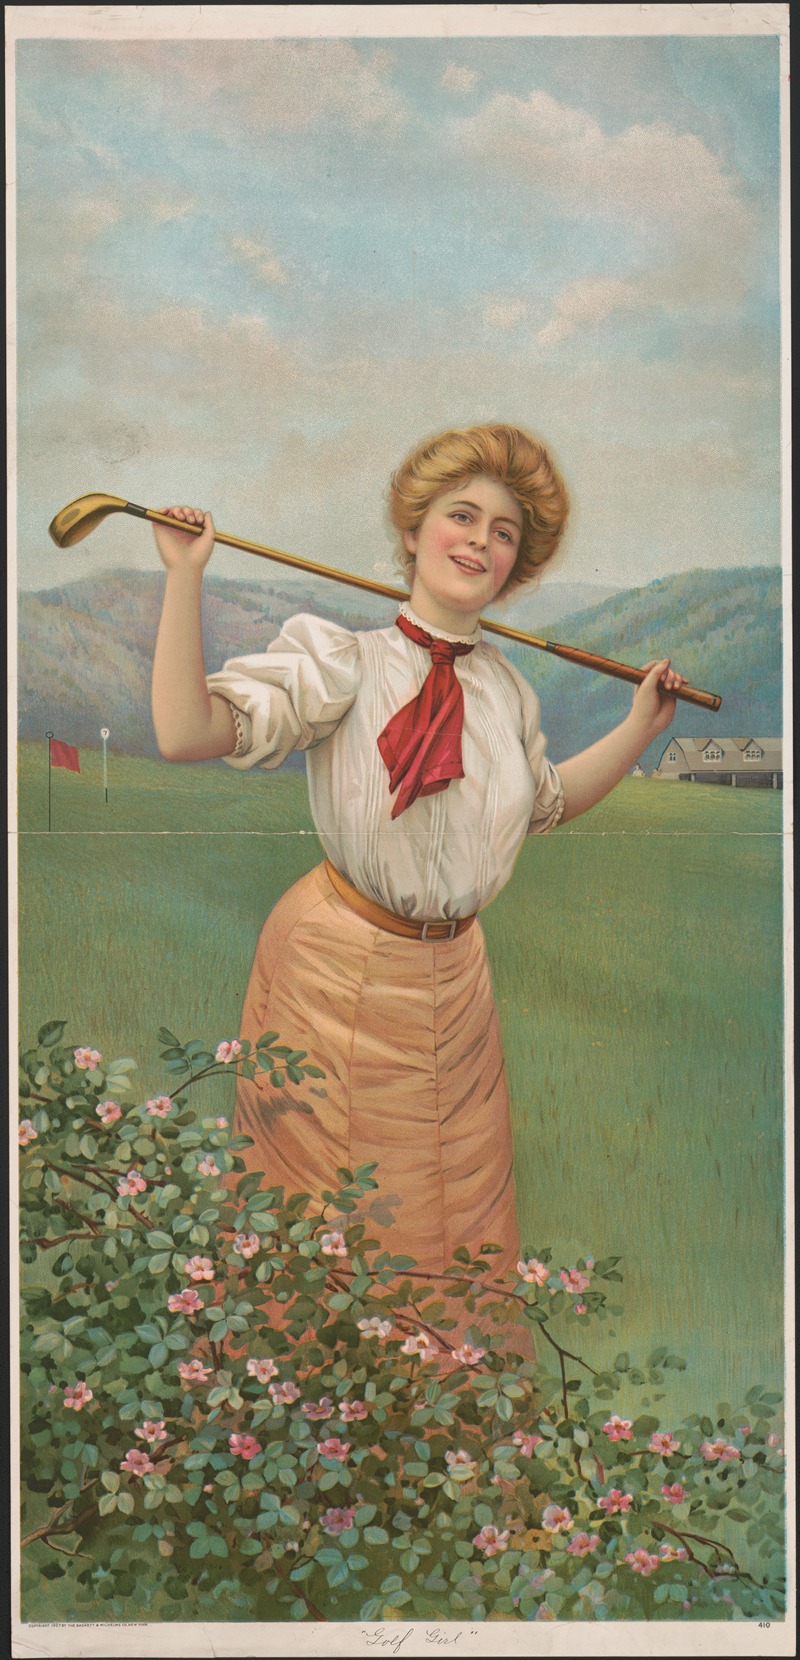 Sackett & Wilhelms Co. - Golf woman